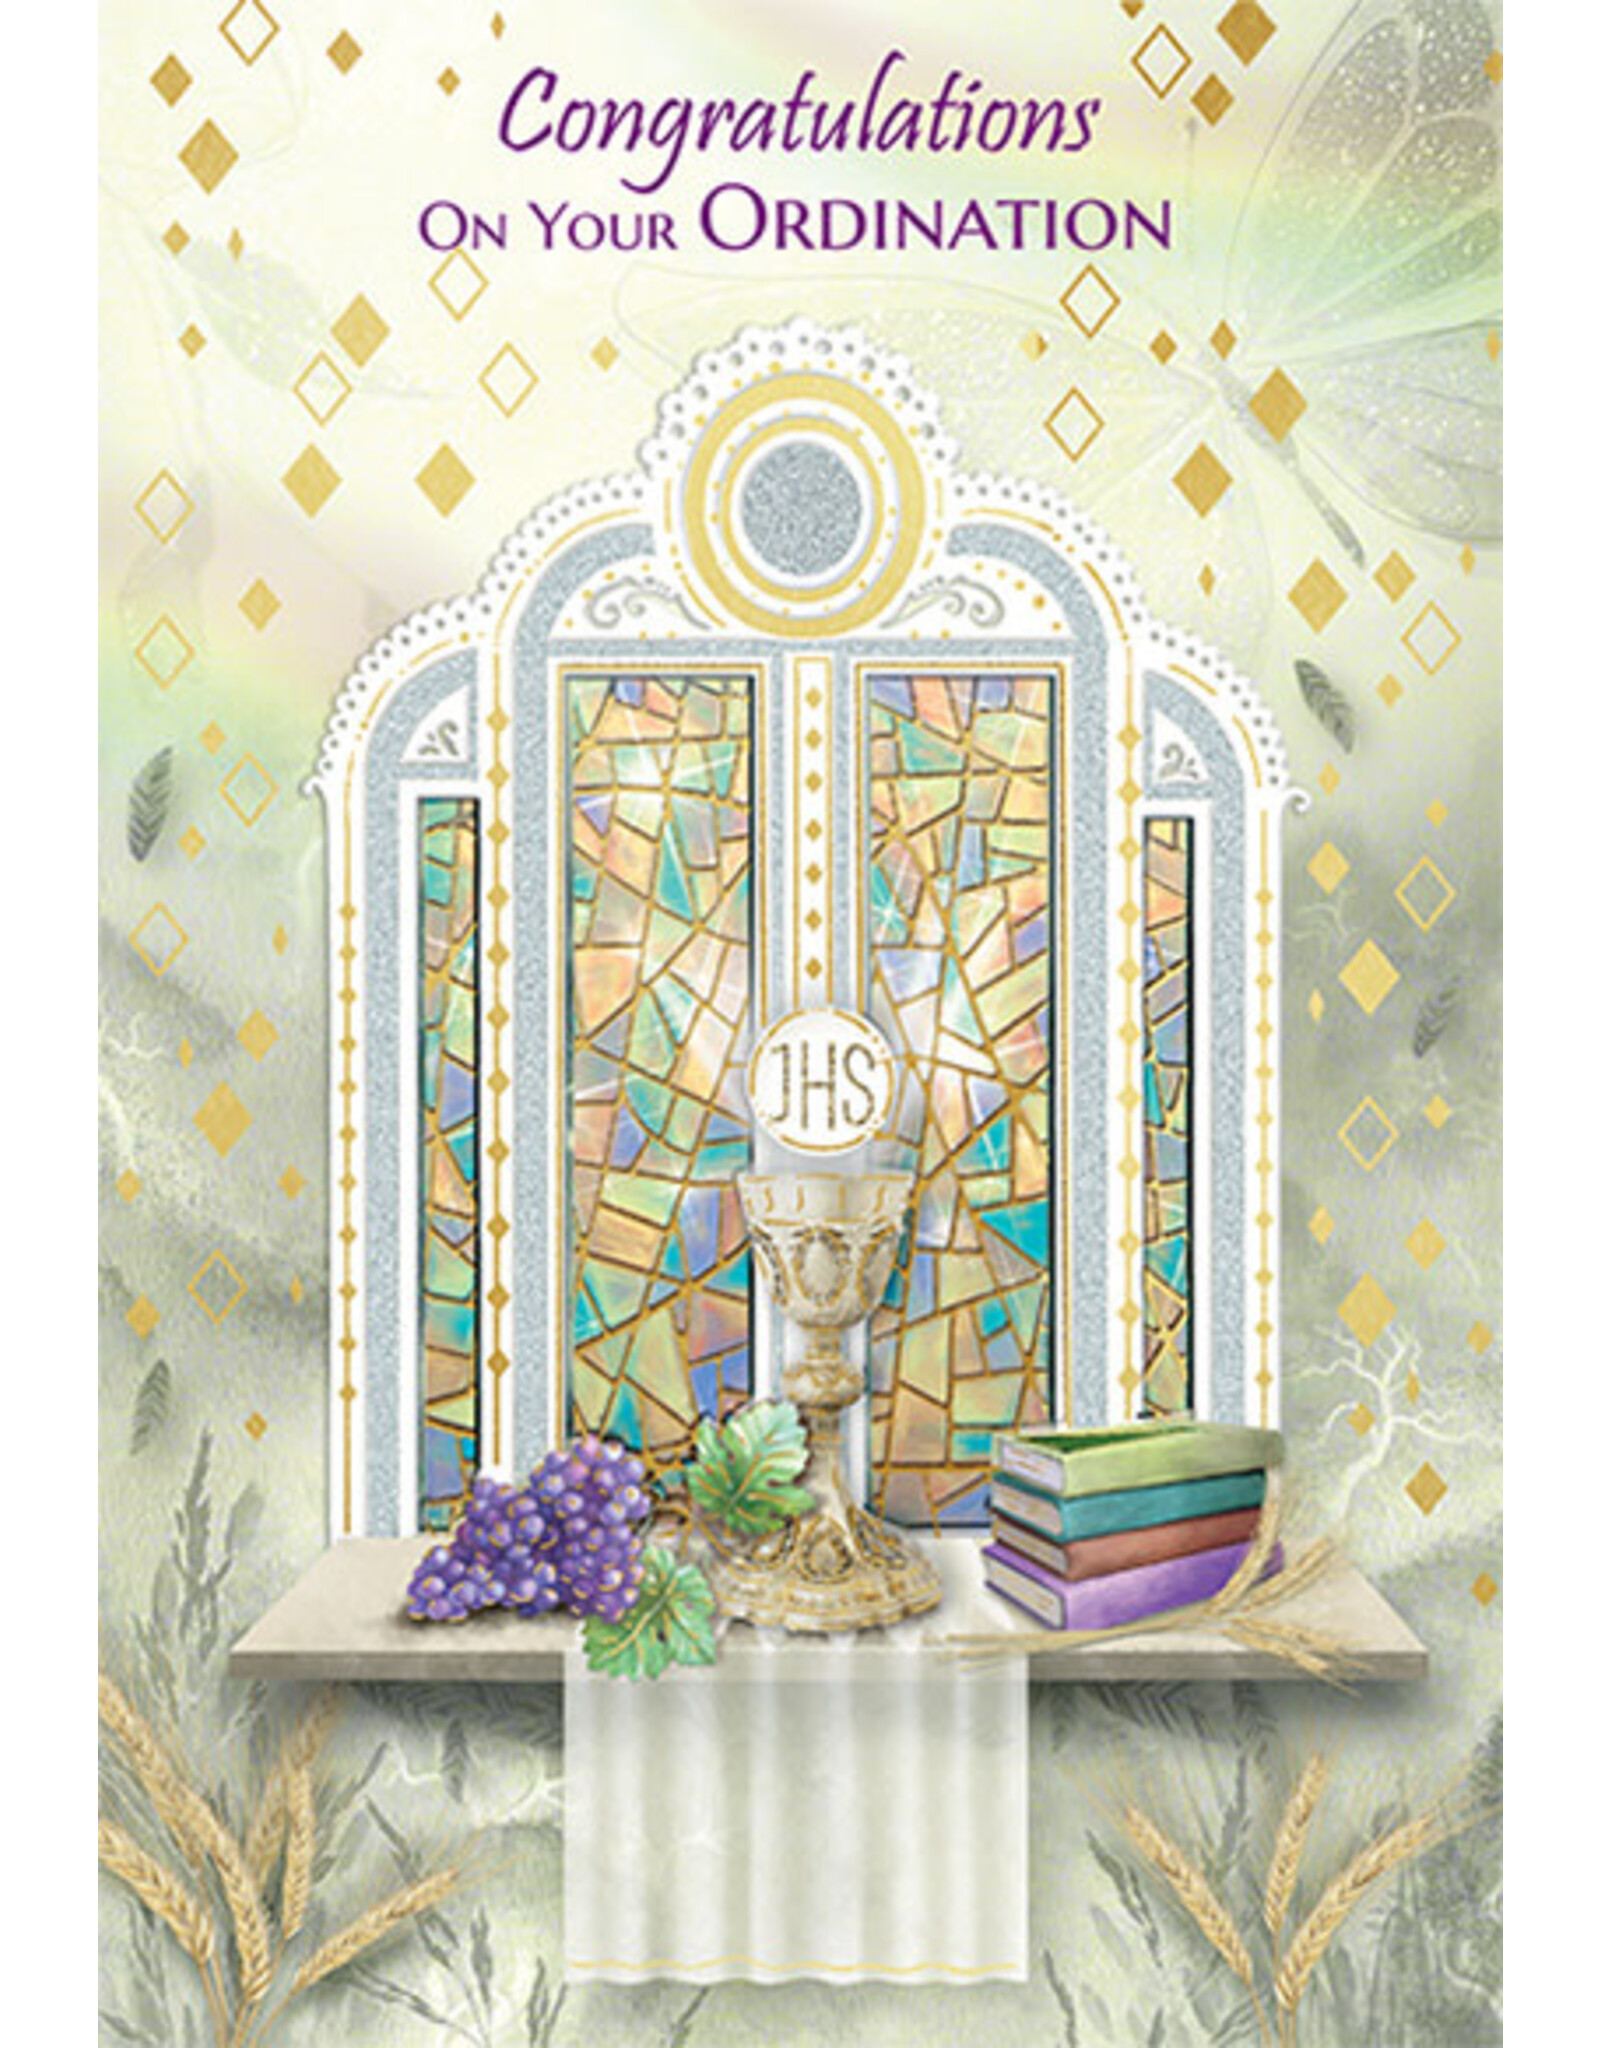 Greetings of Faith Ordination Card - Congratulations